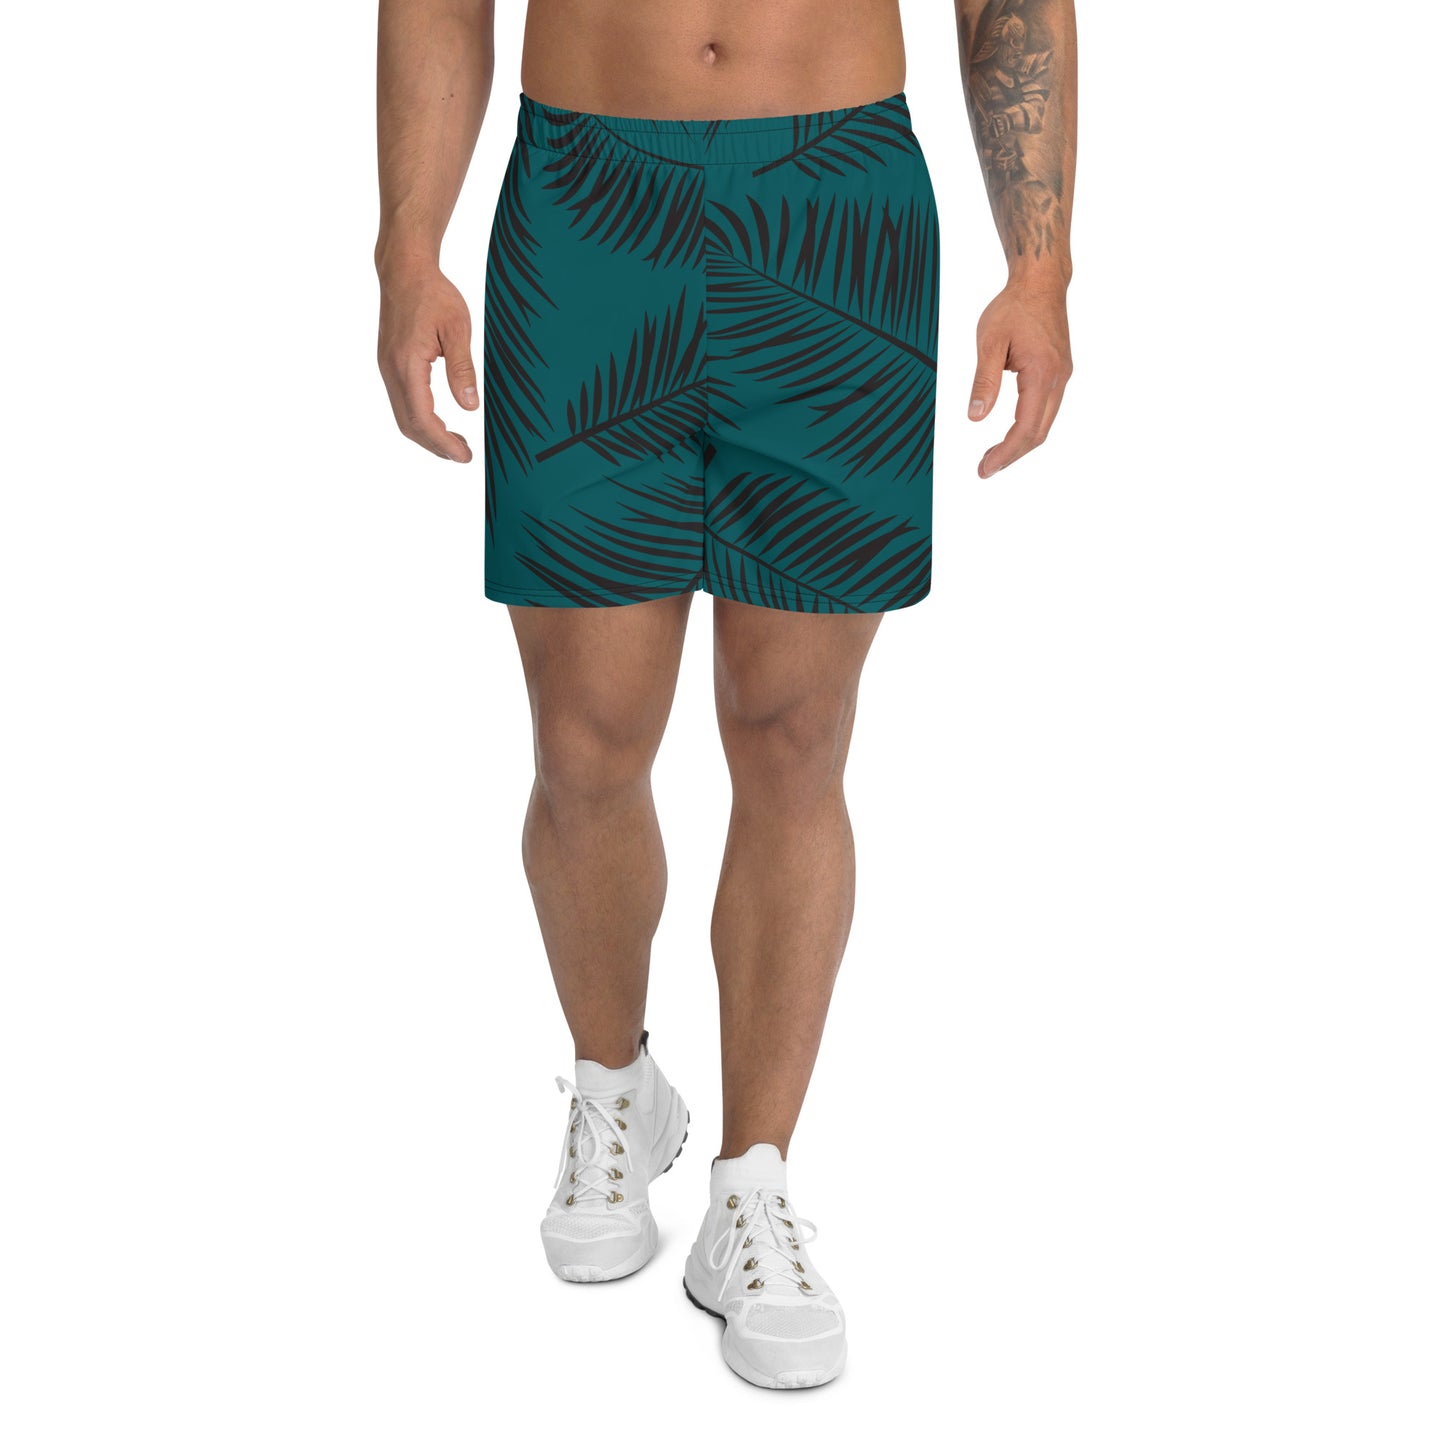 Men's Green  Leaf Pattern Athletic Shorts